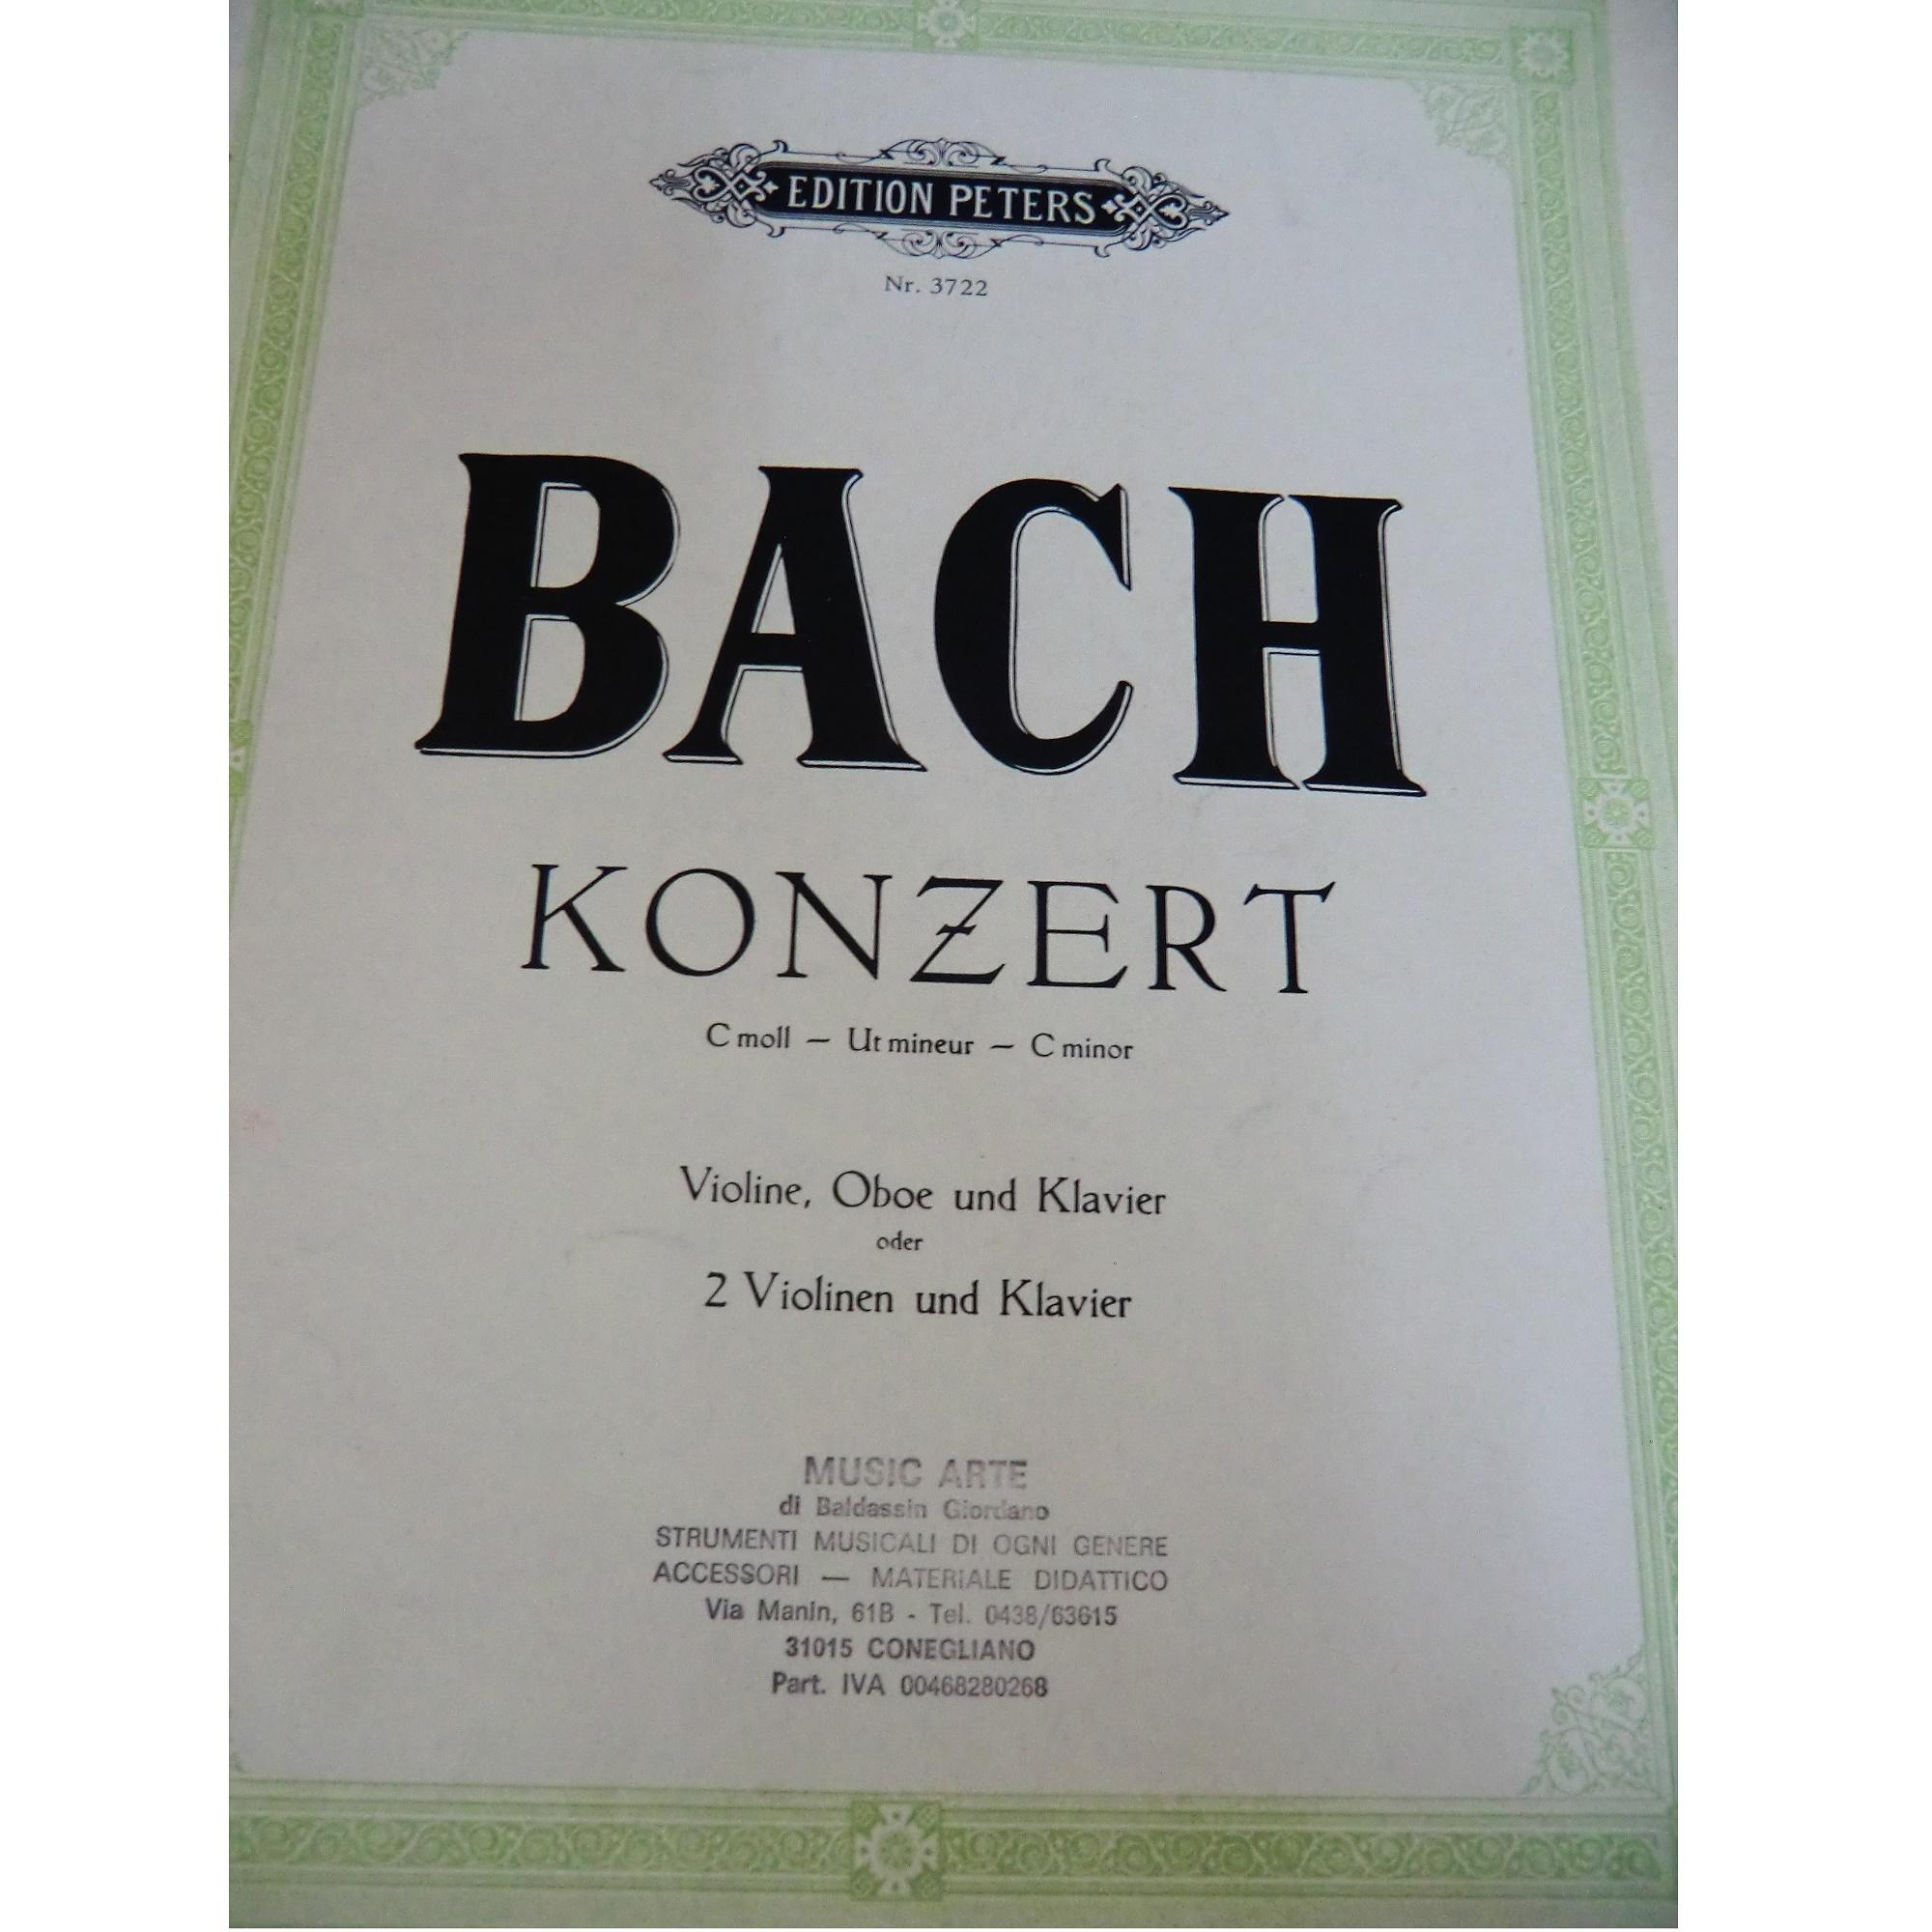 Bach Konzert C minor Violine Oboe Klavier - Edition Peters 